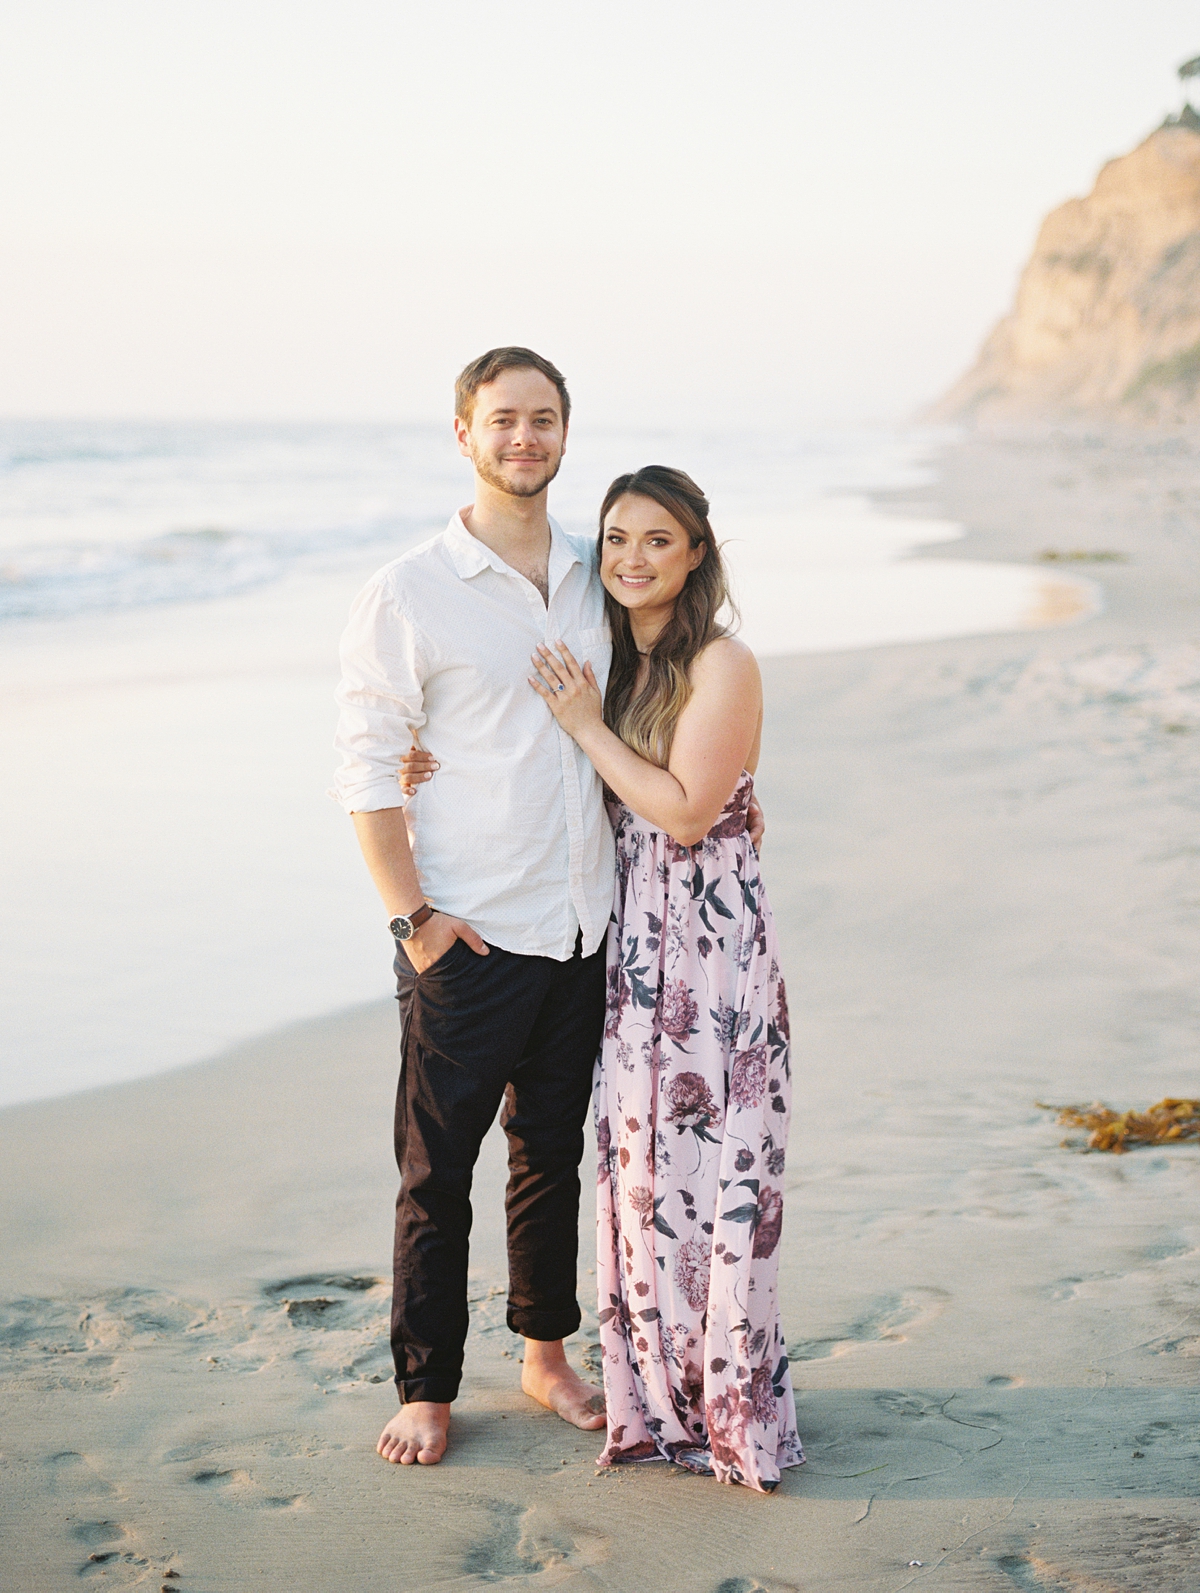 Blacks Beach engagement session - San Diego photographer Jade Maria Photography